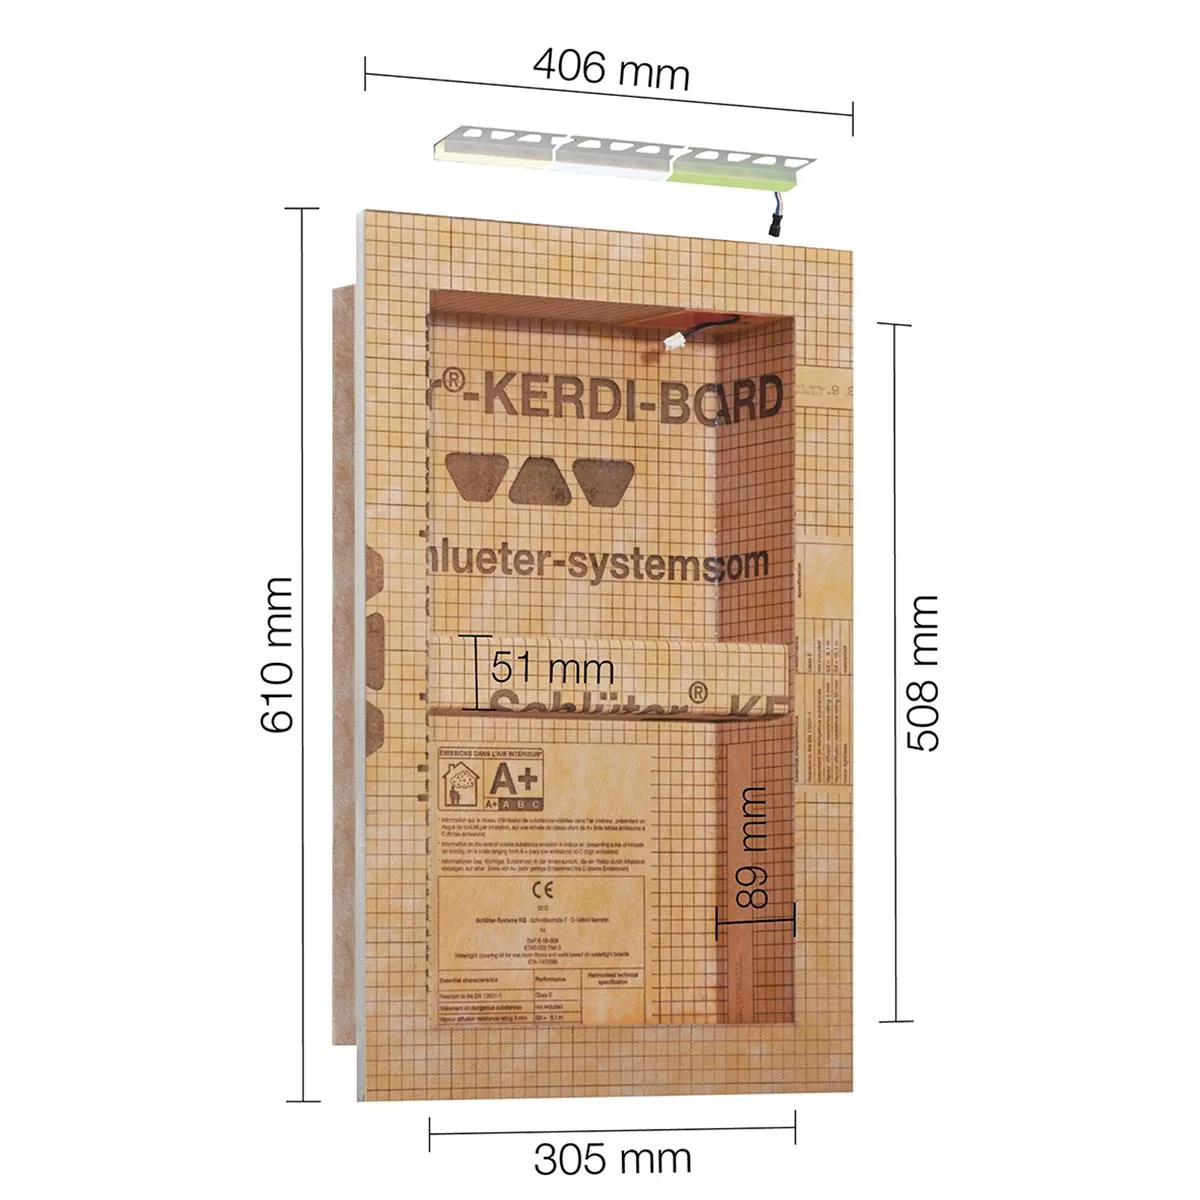 Schlüter Kerdi Board NLT nischset LED-belysning neutral vit 30,5x50,8x0,89 cm